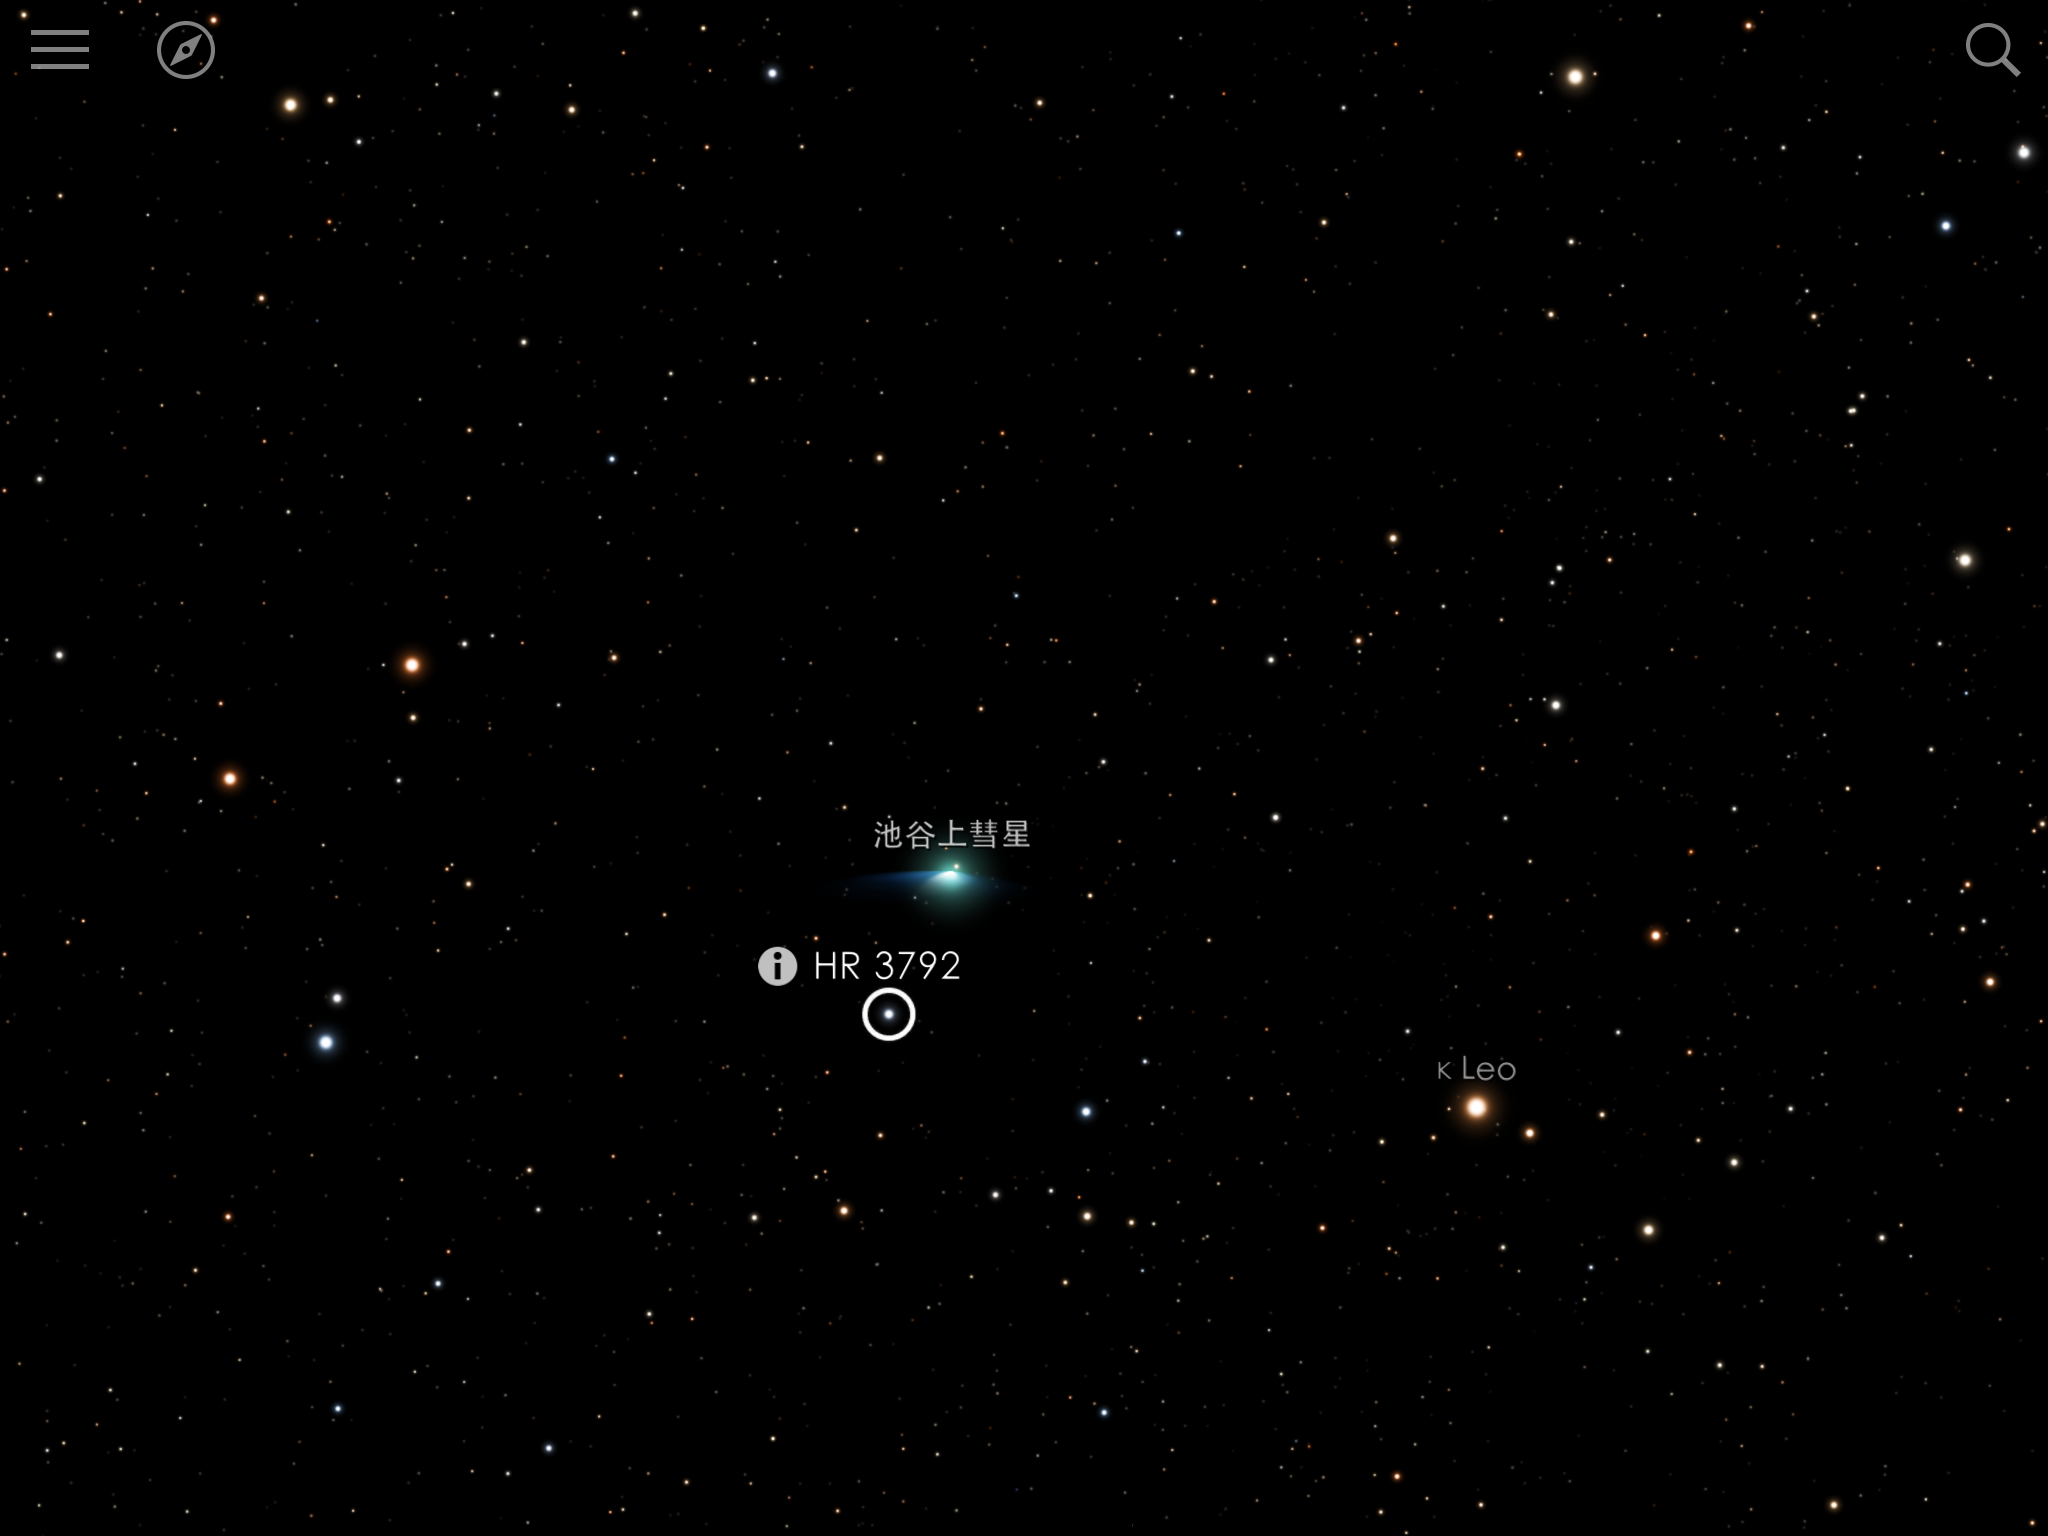 池谷上彗星也没找到呀 HR3792可见